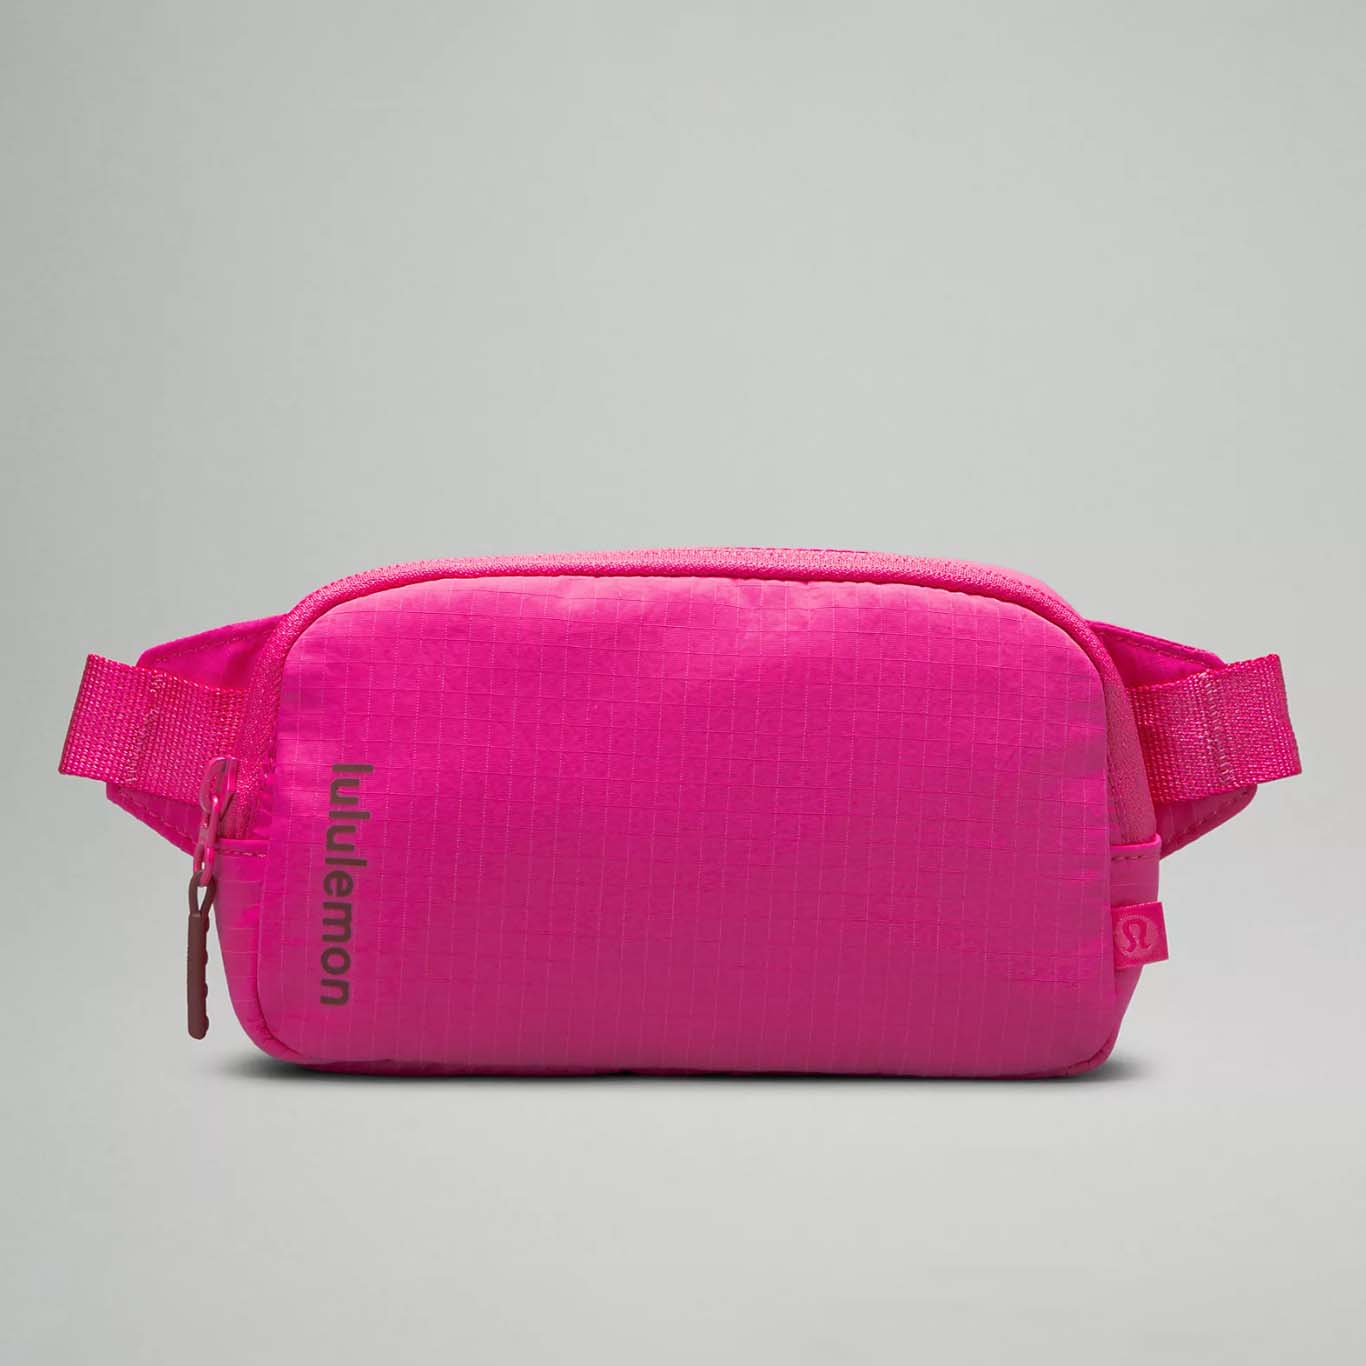 Fuschia pink mini fanny pack